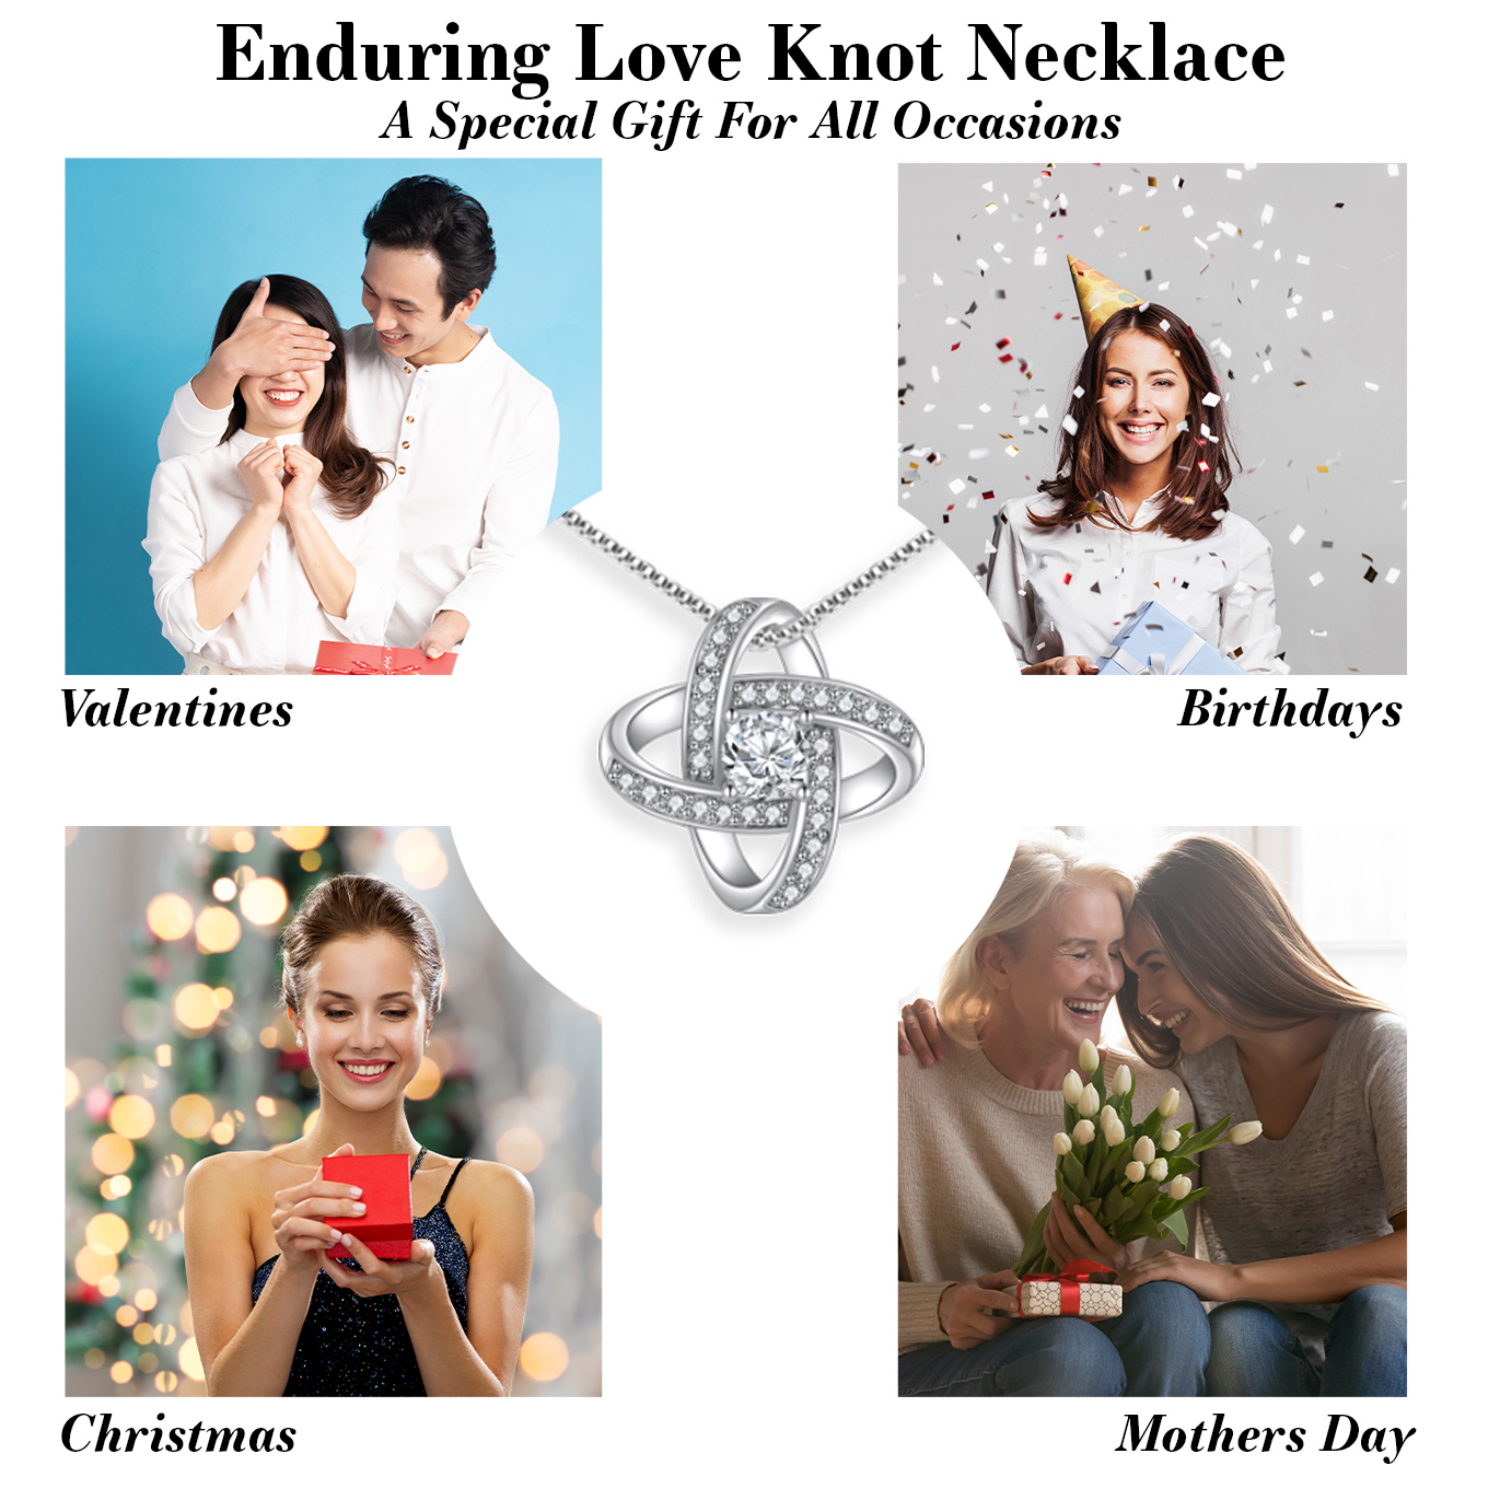 Personalized Necklaces + Message Cards - Pendant Necklace + Personalized Card of Roses 